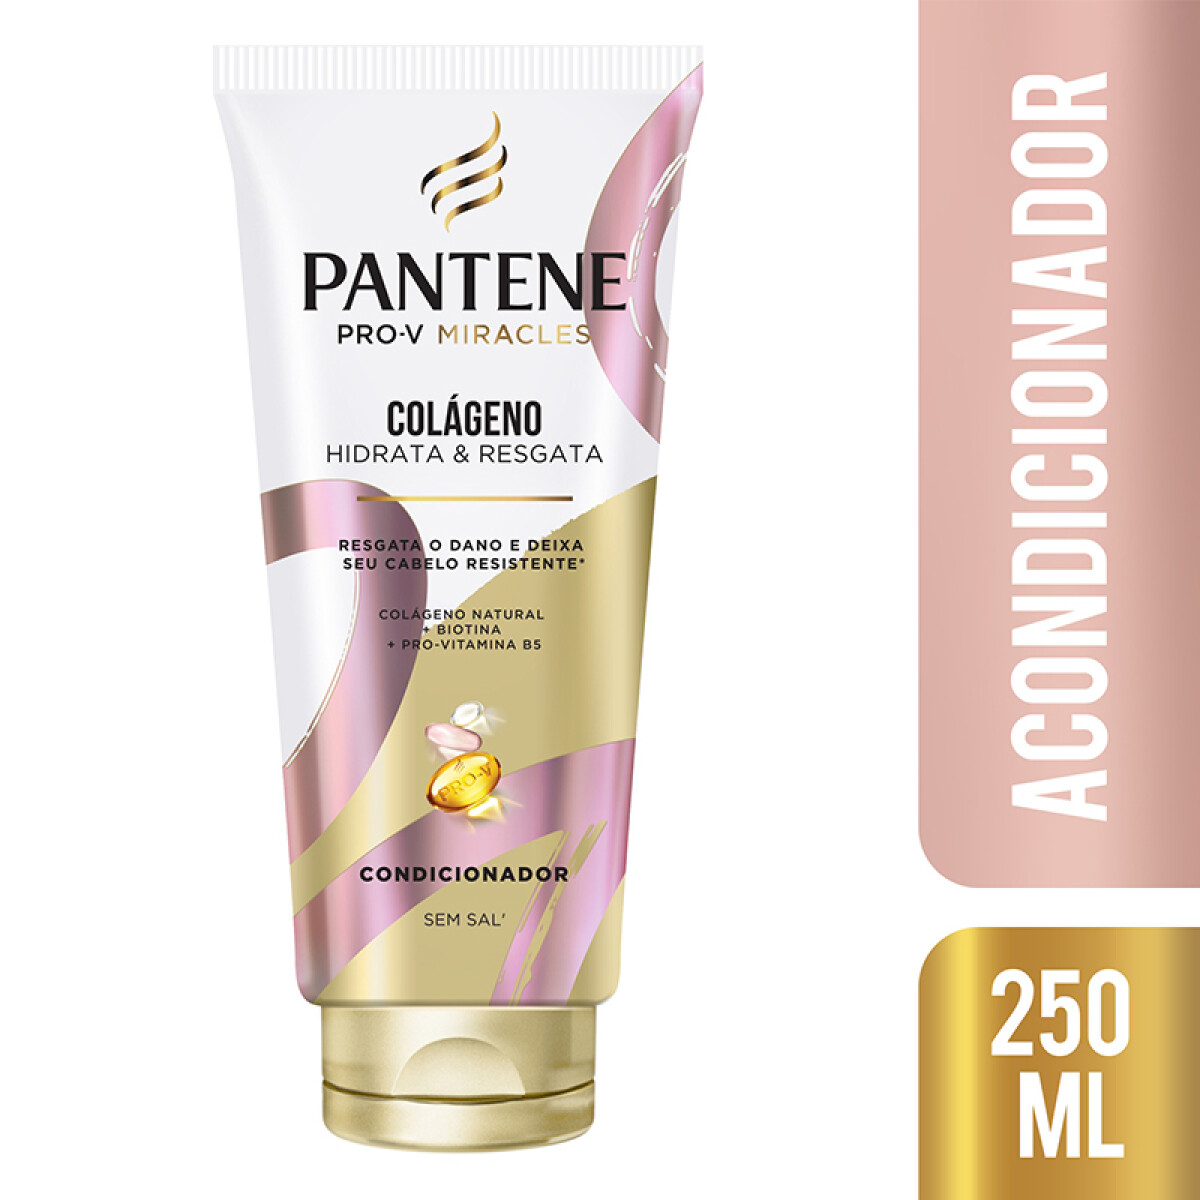 Pantene colágeno - Acondicionador 250 ml 